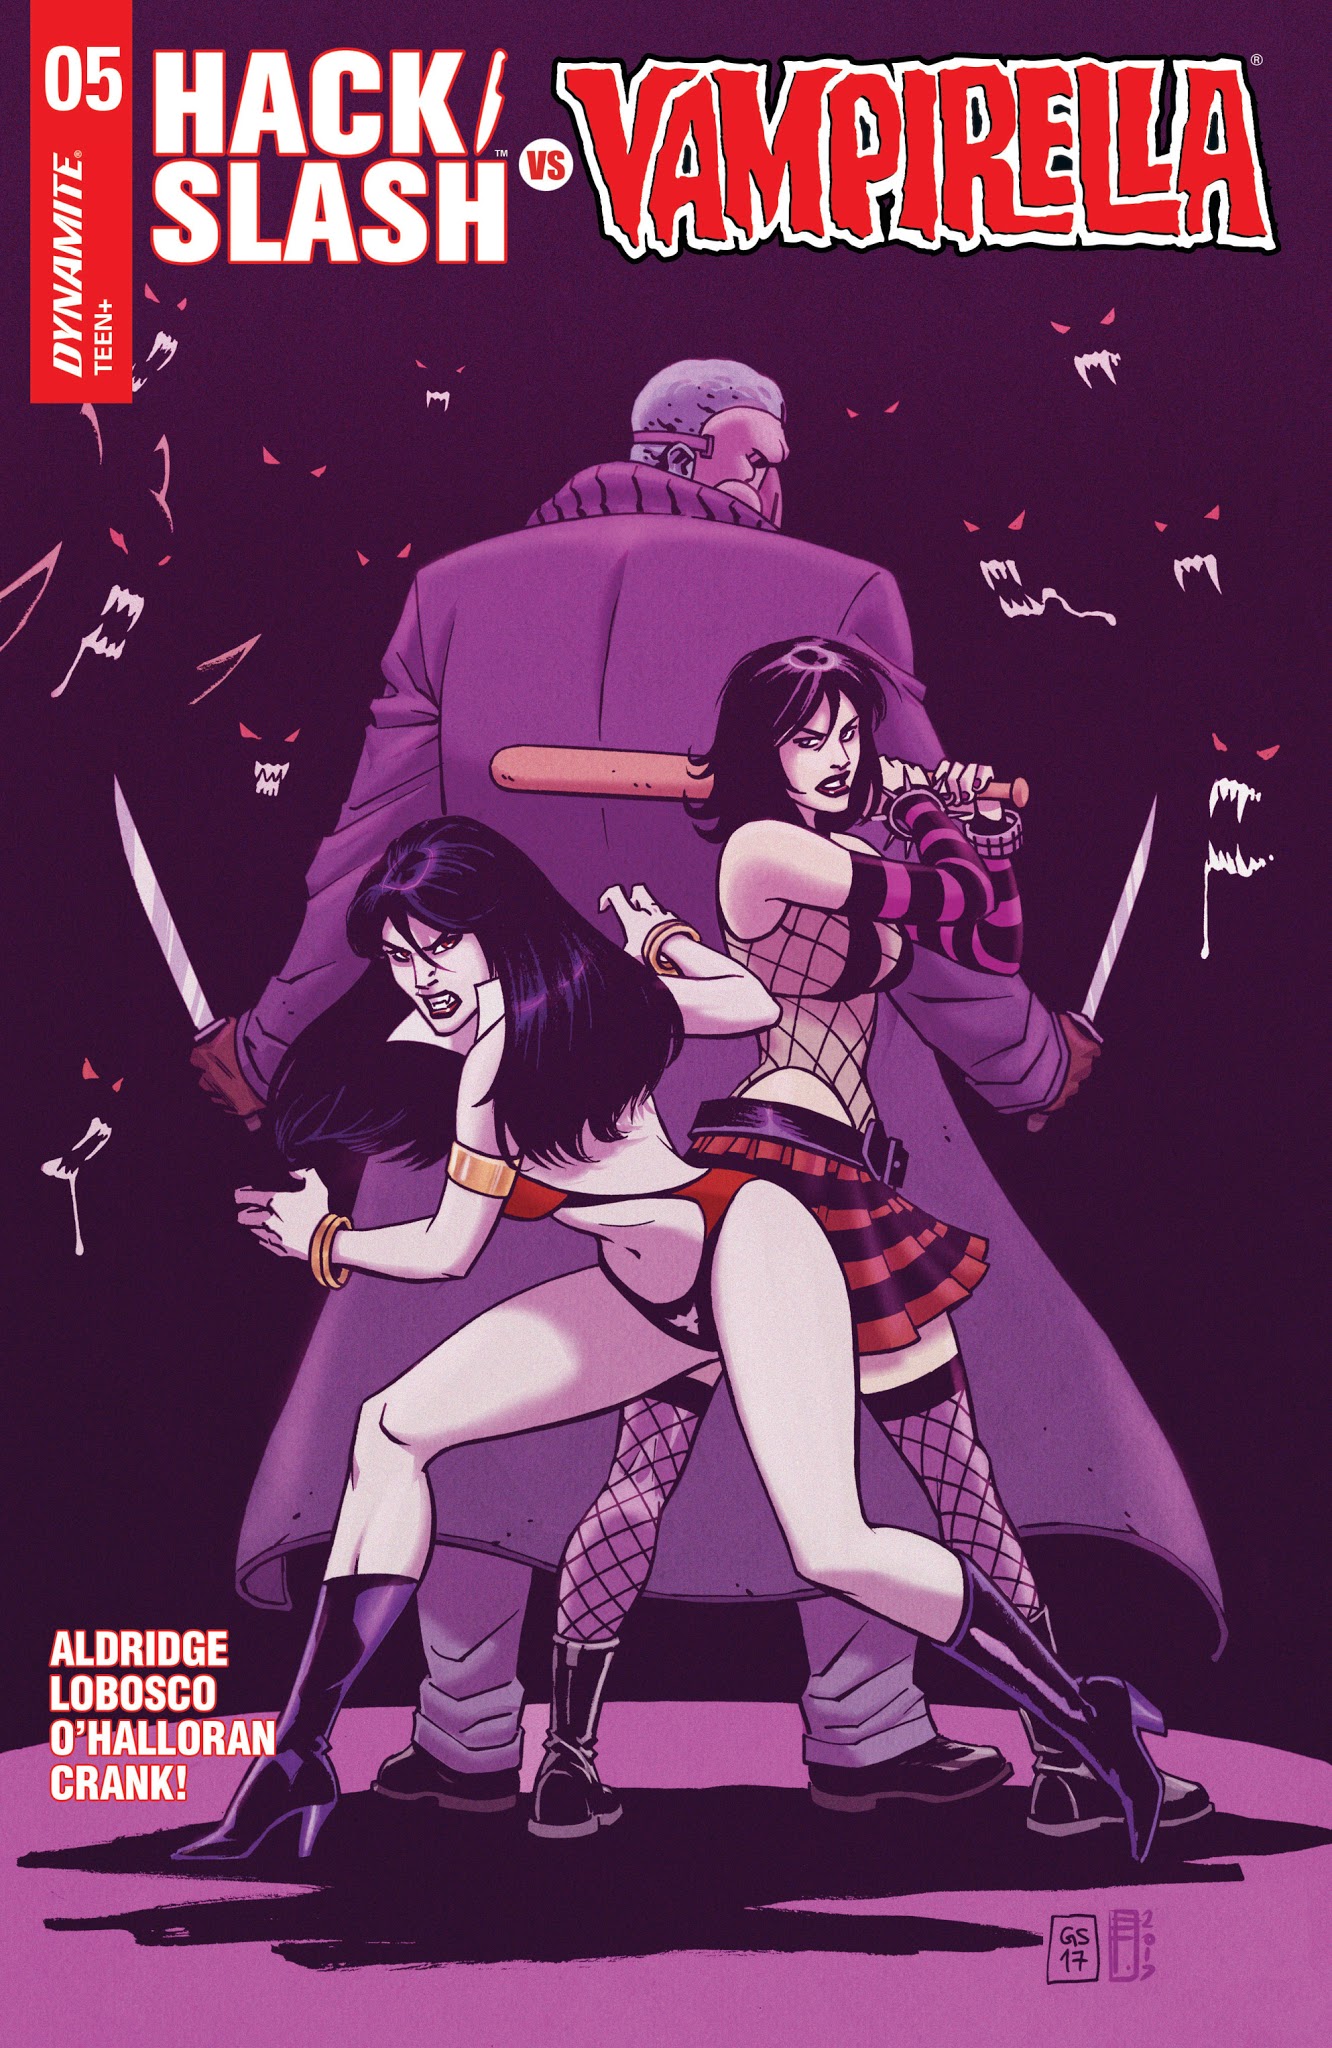 Read online Hack/Slash vs. Vampirella comic -  Issue #5 - 2